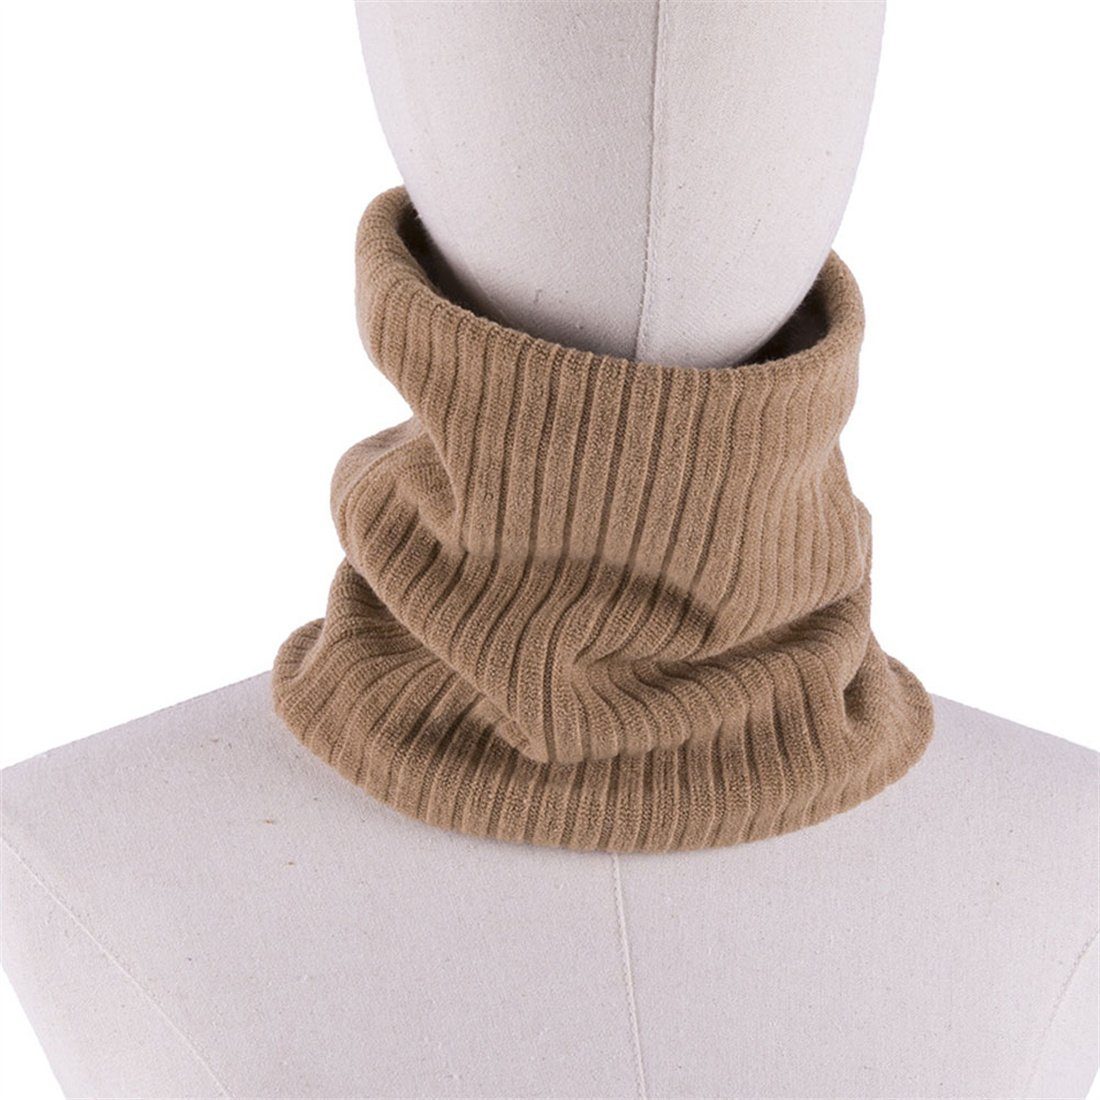 DÖRÖY Modeschal Doppellagiger gepolsterter Unisex-Schal,warmer Winterschal zumStricken khaki